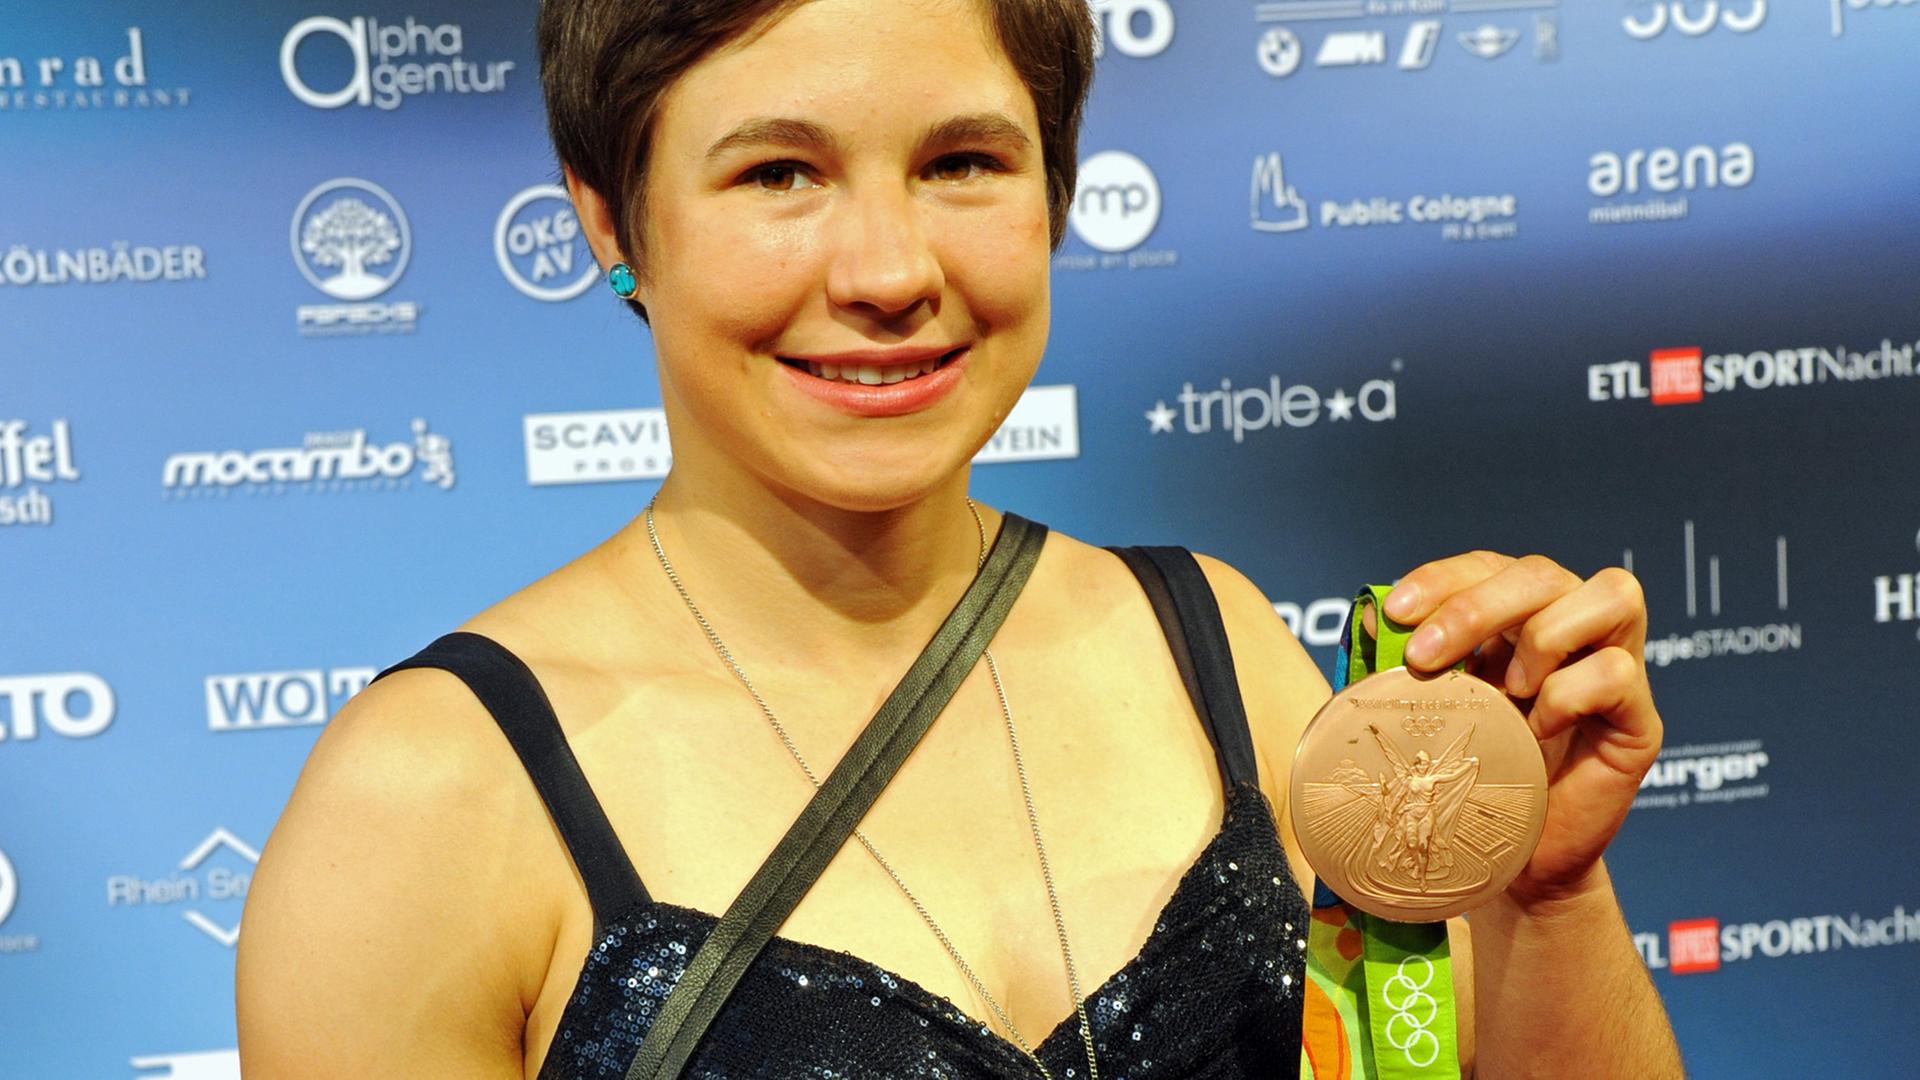 Bronze-Medallien-Gewinnerin im Judo Laura Vargas Koch posiert am 23. August 2016 in Köln bei der ETL-EXPRESS-Sportnacht.